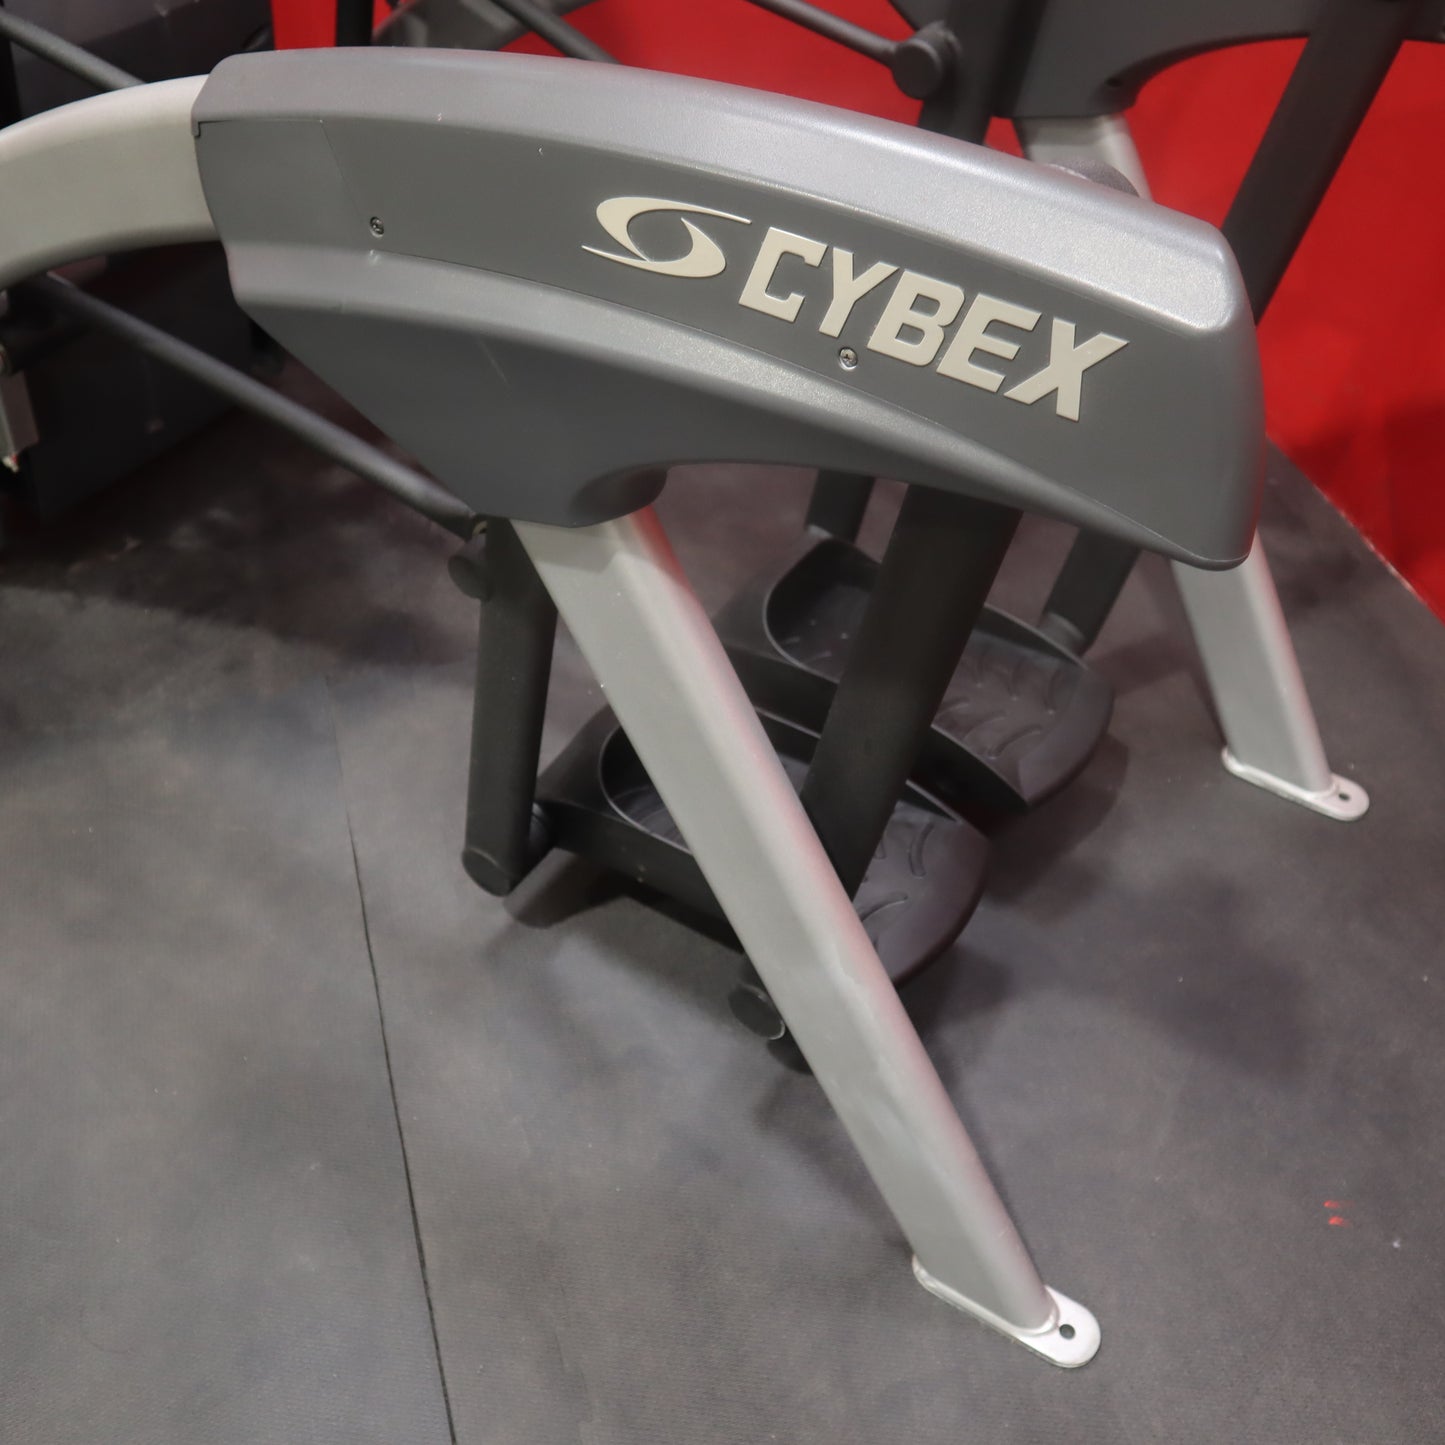 Cybex 625AT Arc Trainer (Refurbished)